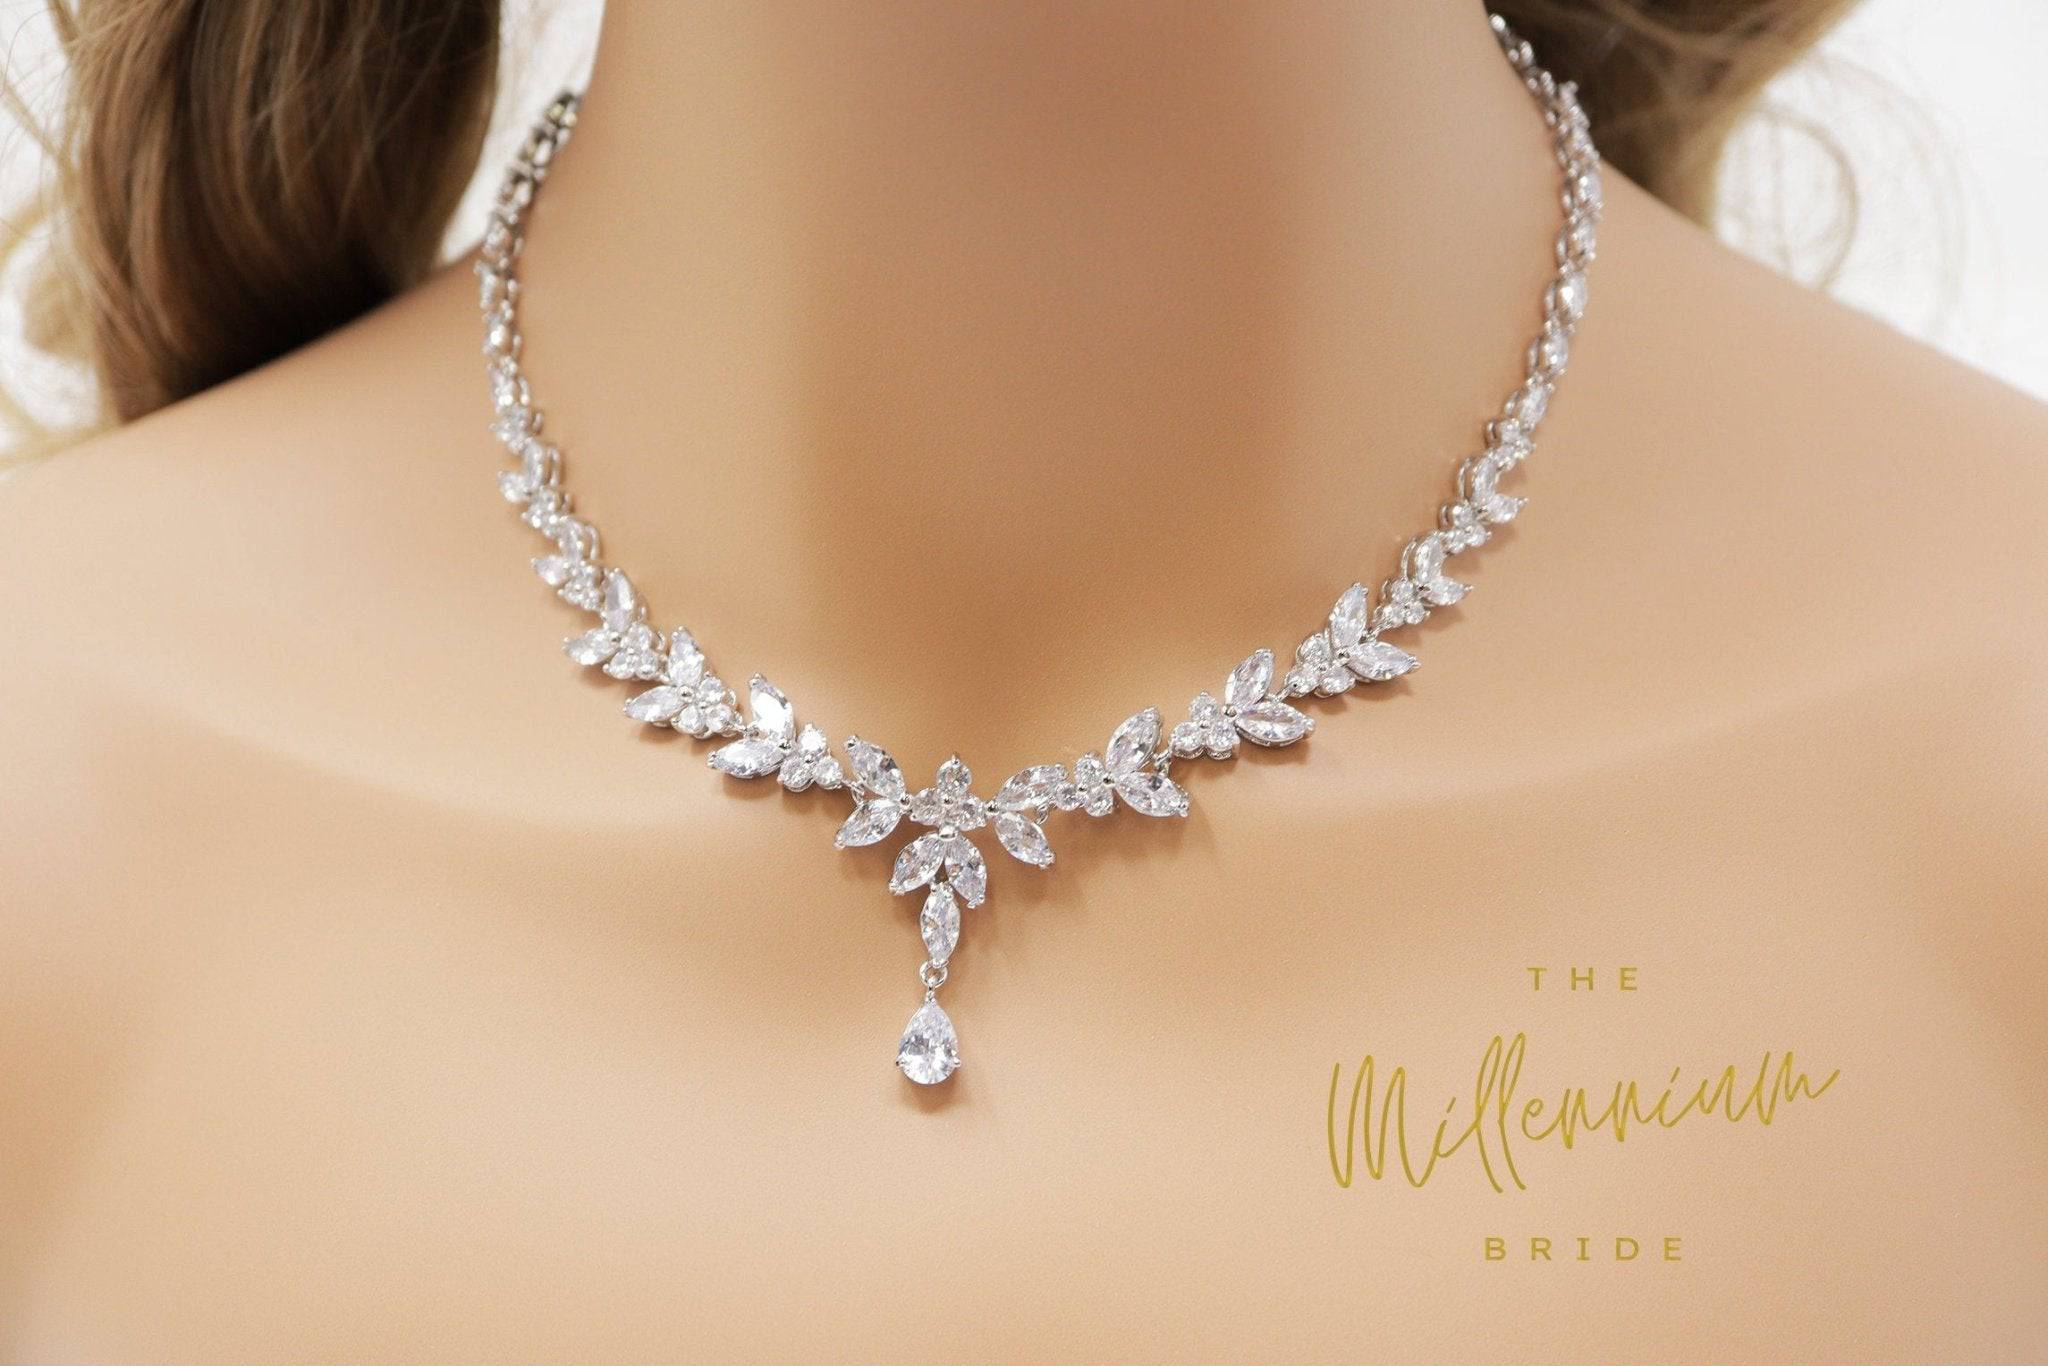 American Diamond rose gold set|Pink Diamond Luxury look CZ Diamond Choker  Necklace|Indian Wedding jewelry |Bollywood bridal set|Gift for her